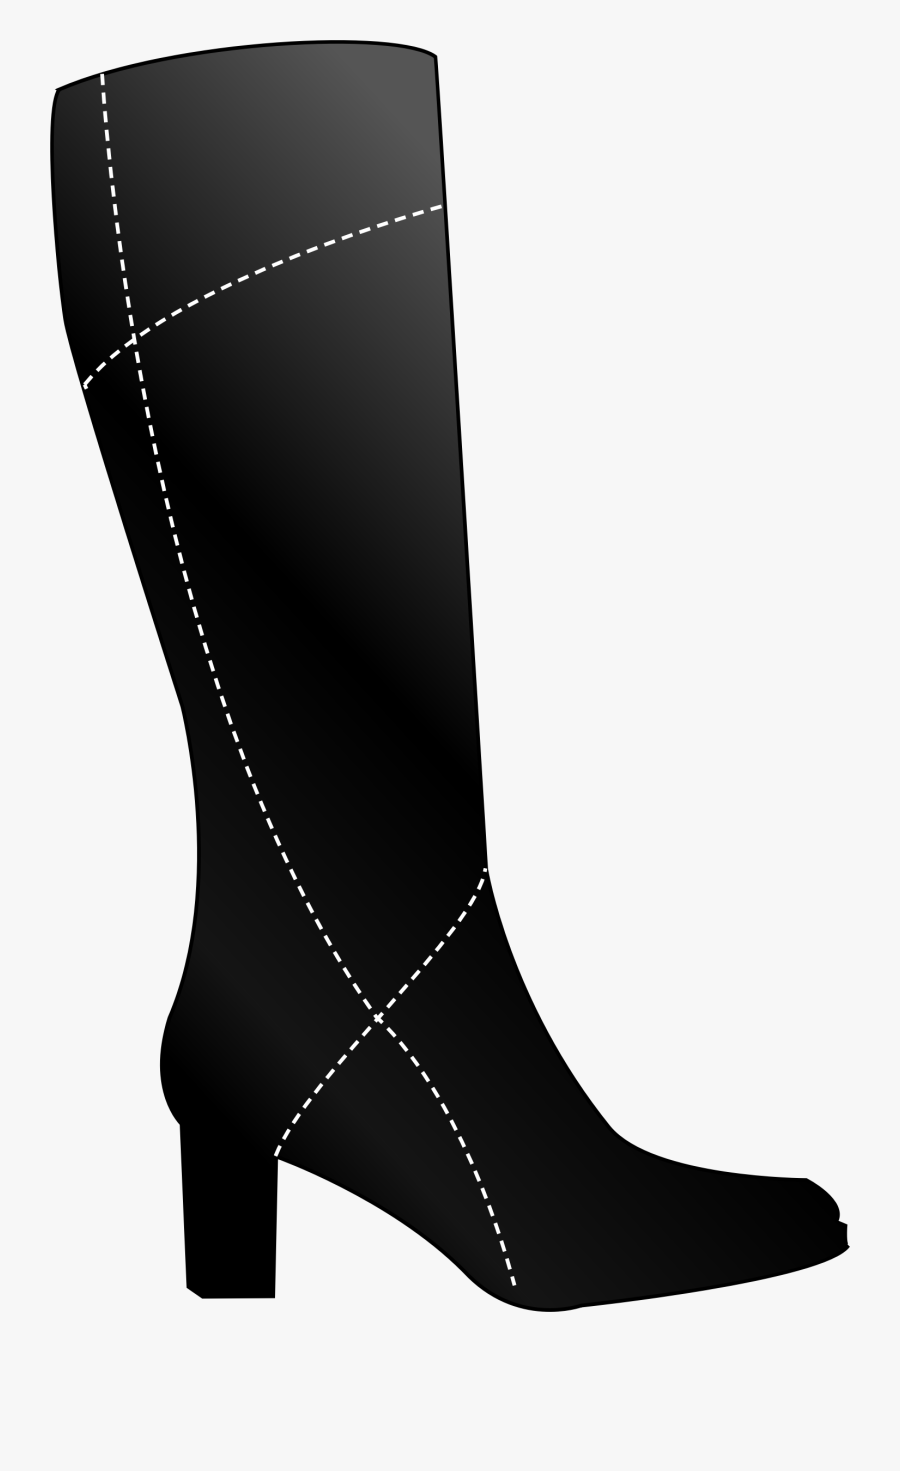 Boot Clipart High Boot - Black Boot Clipart, Transparent Clipart